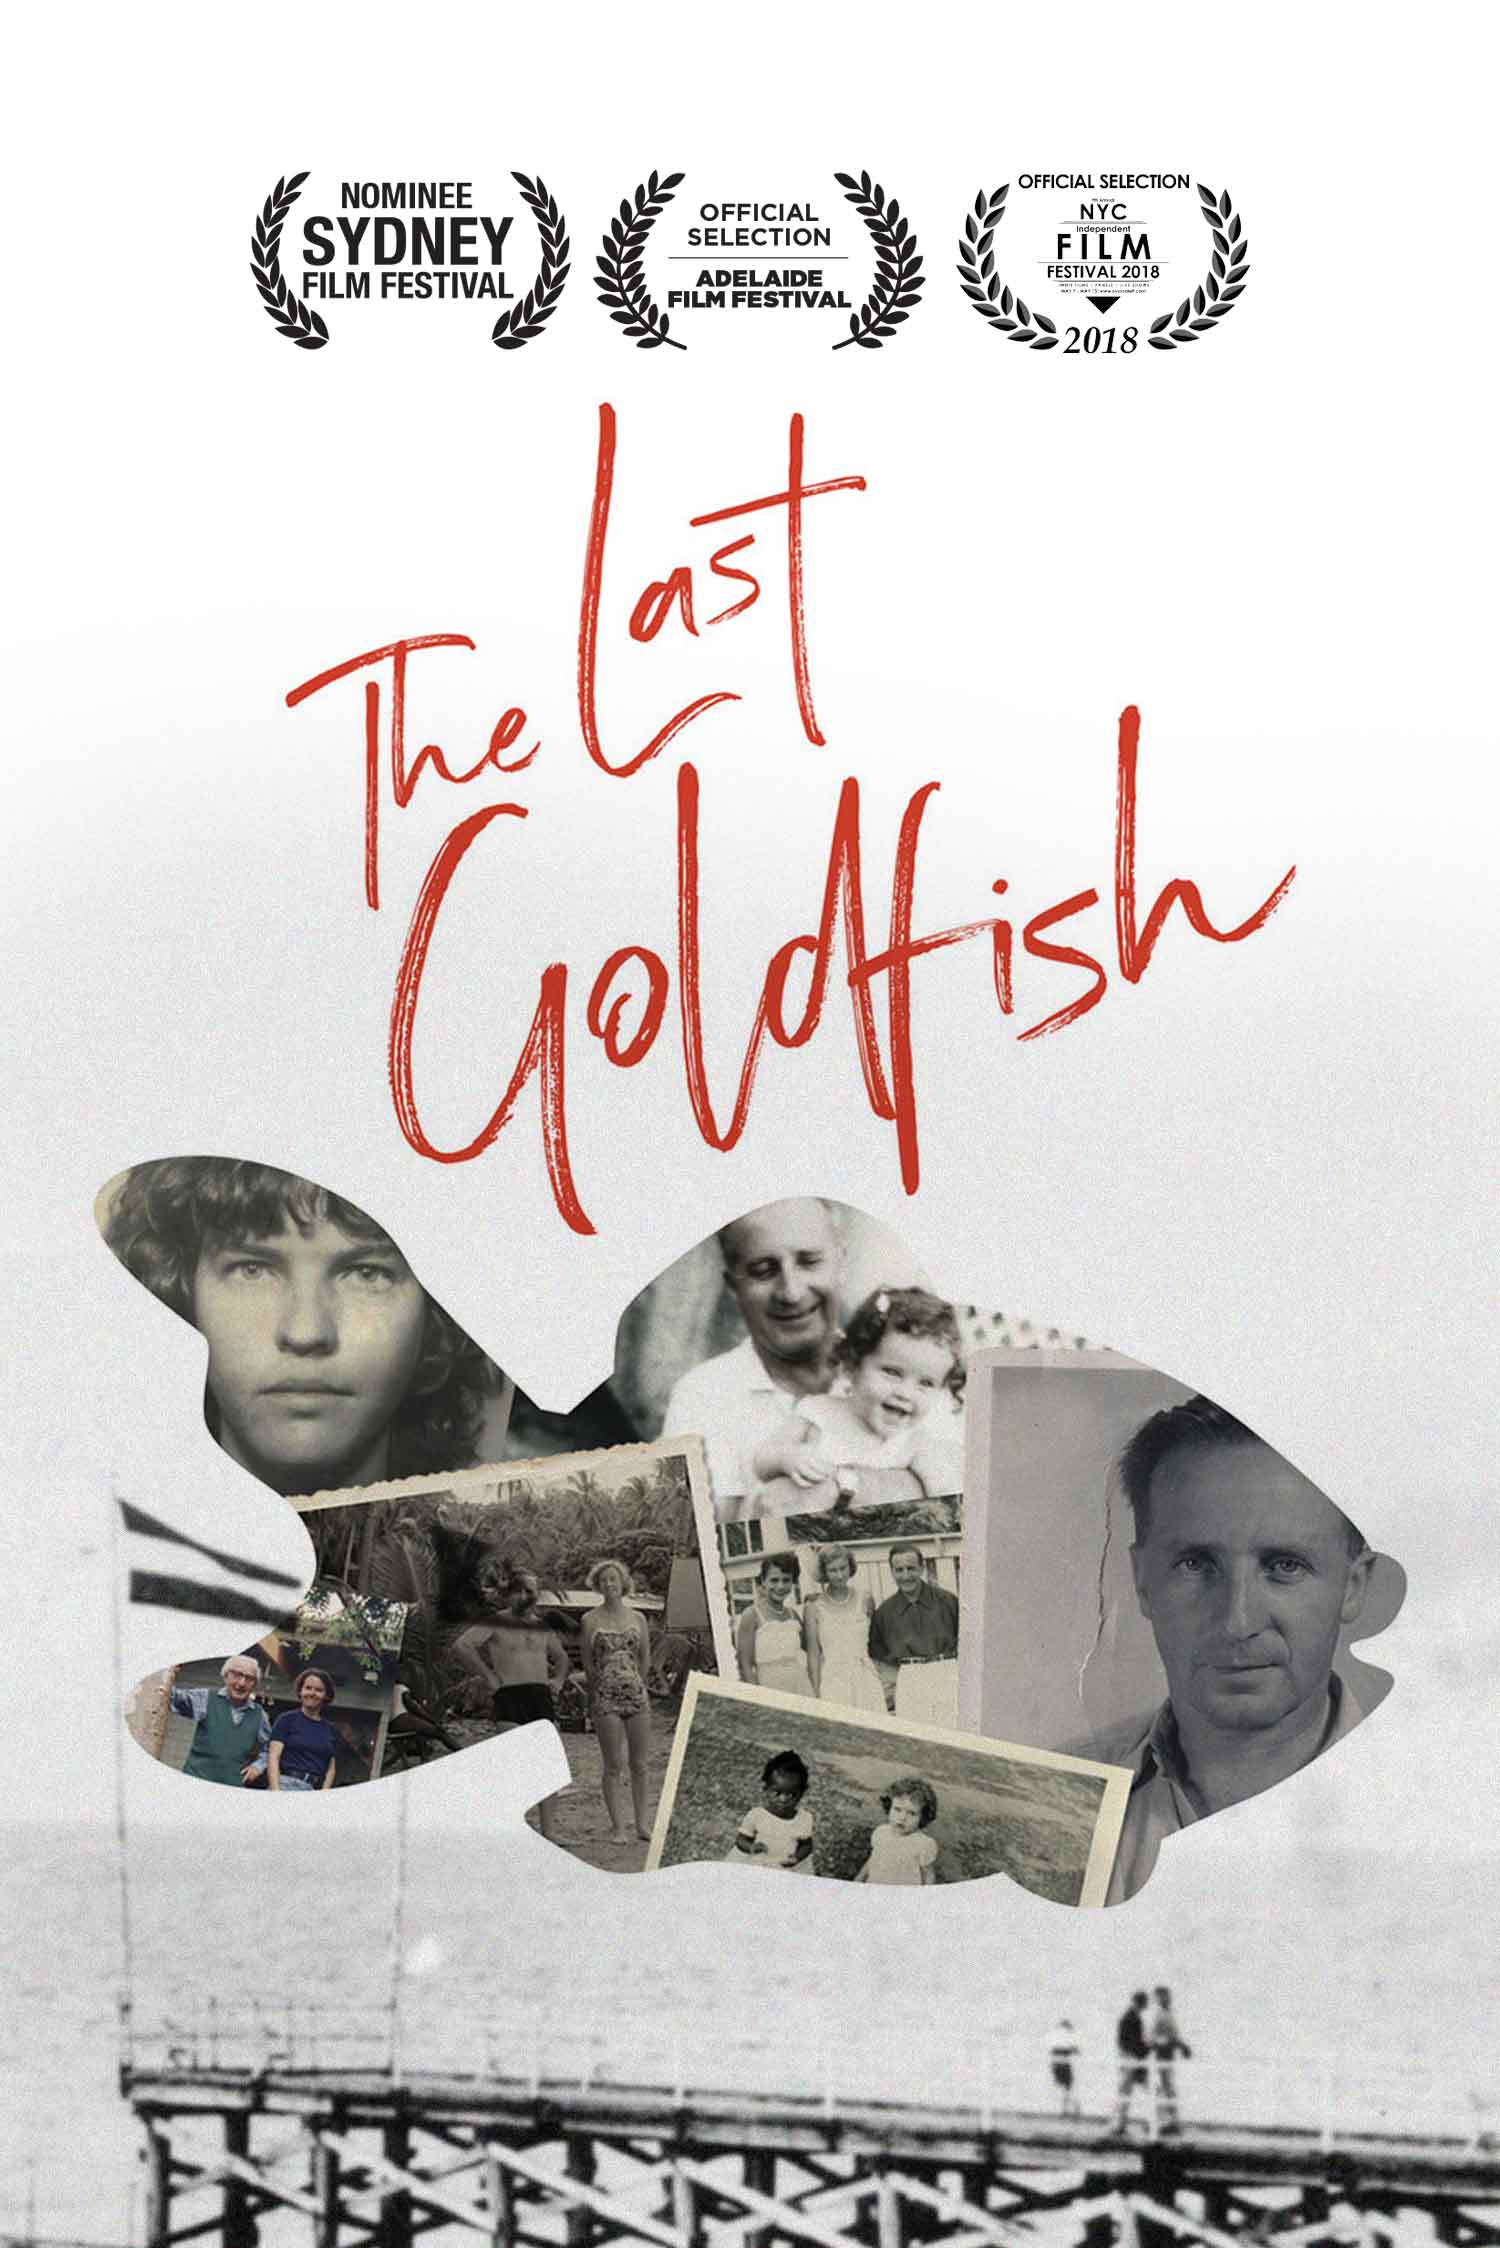 The Last Goldfish